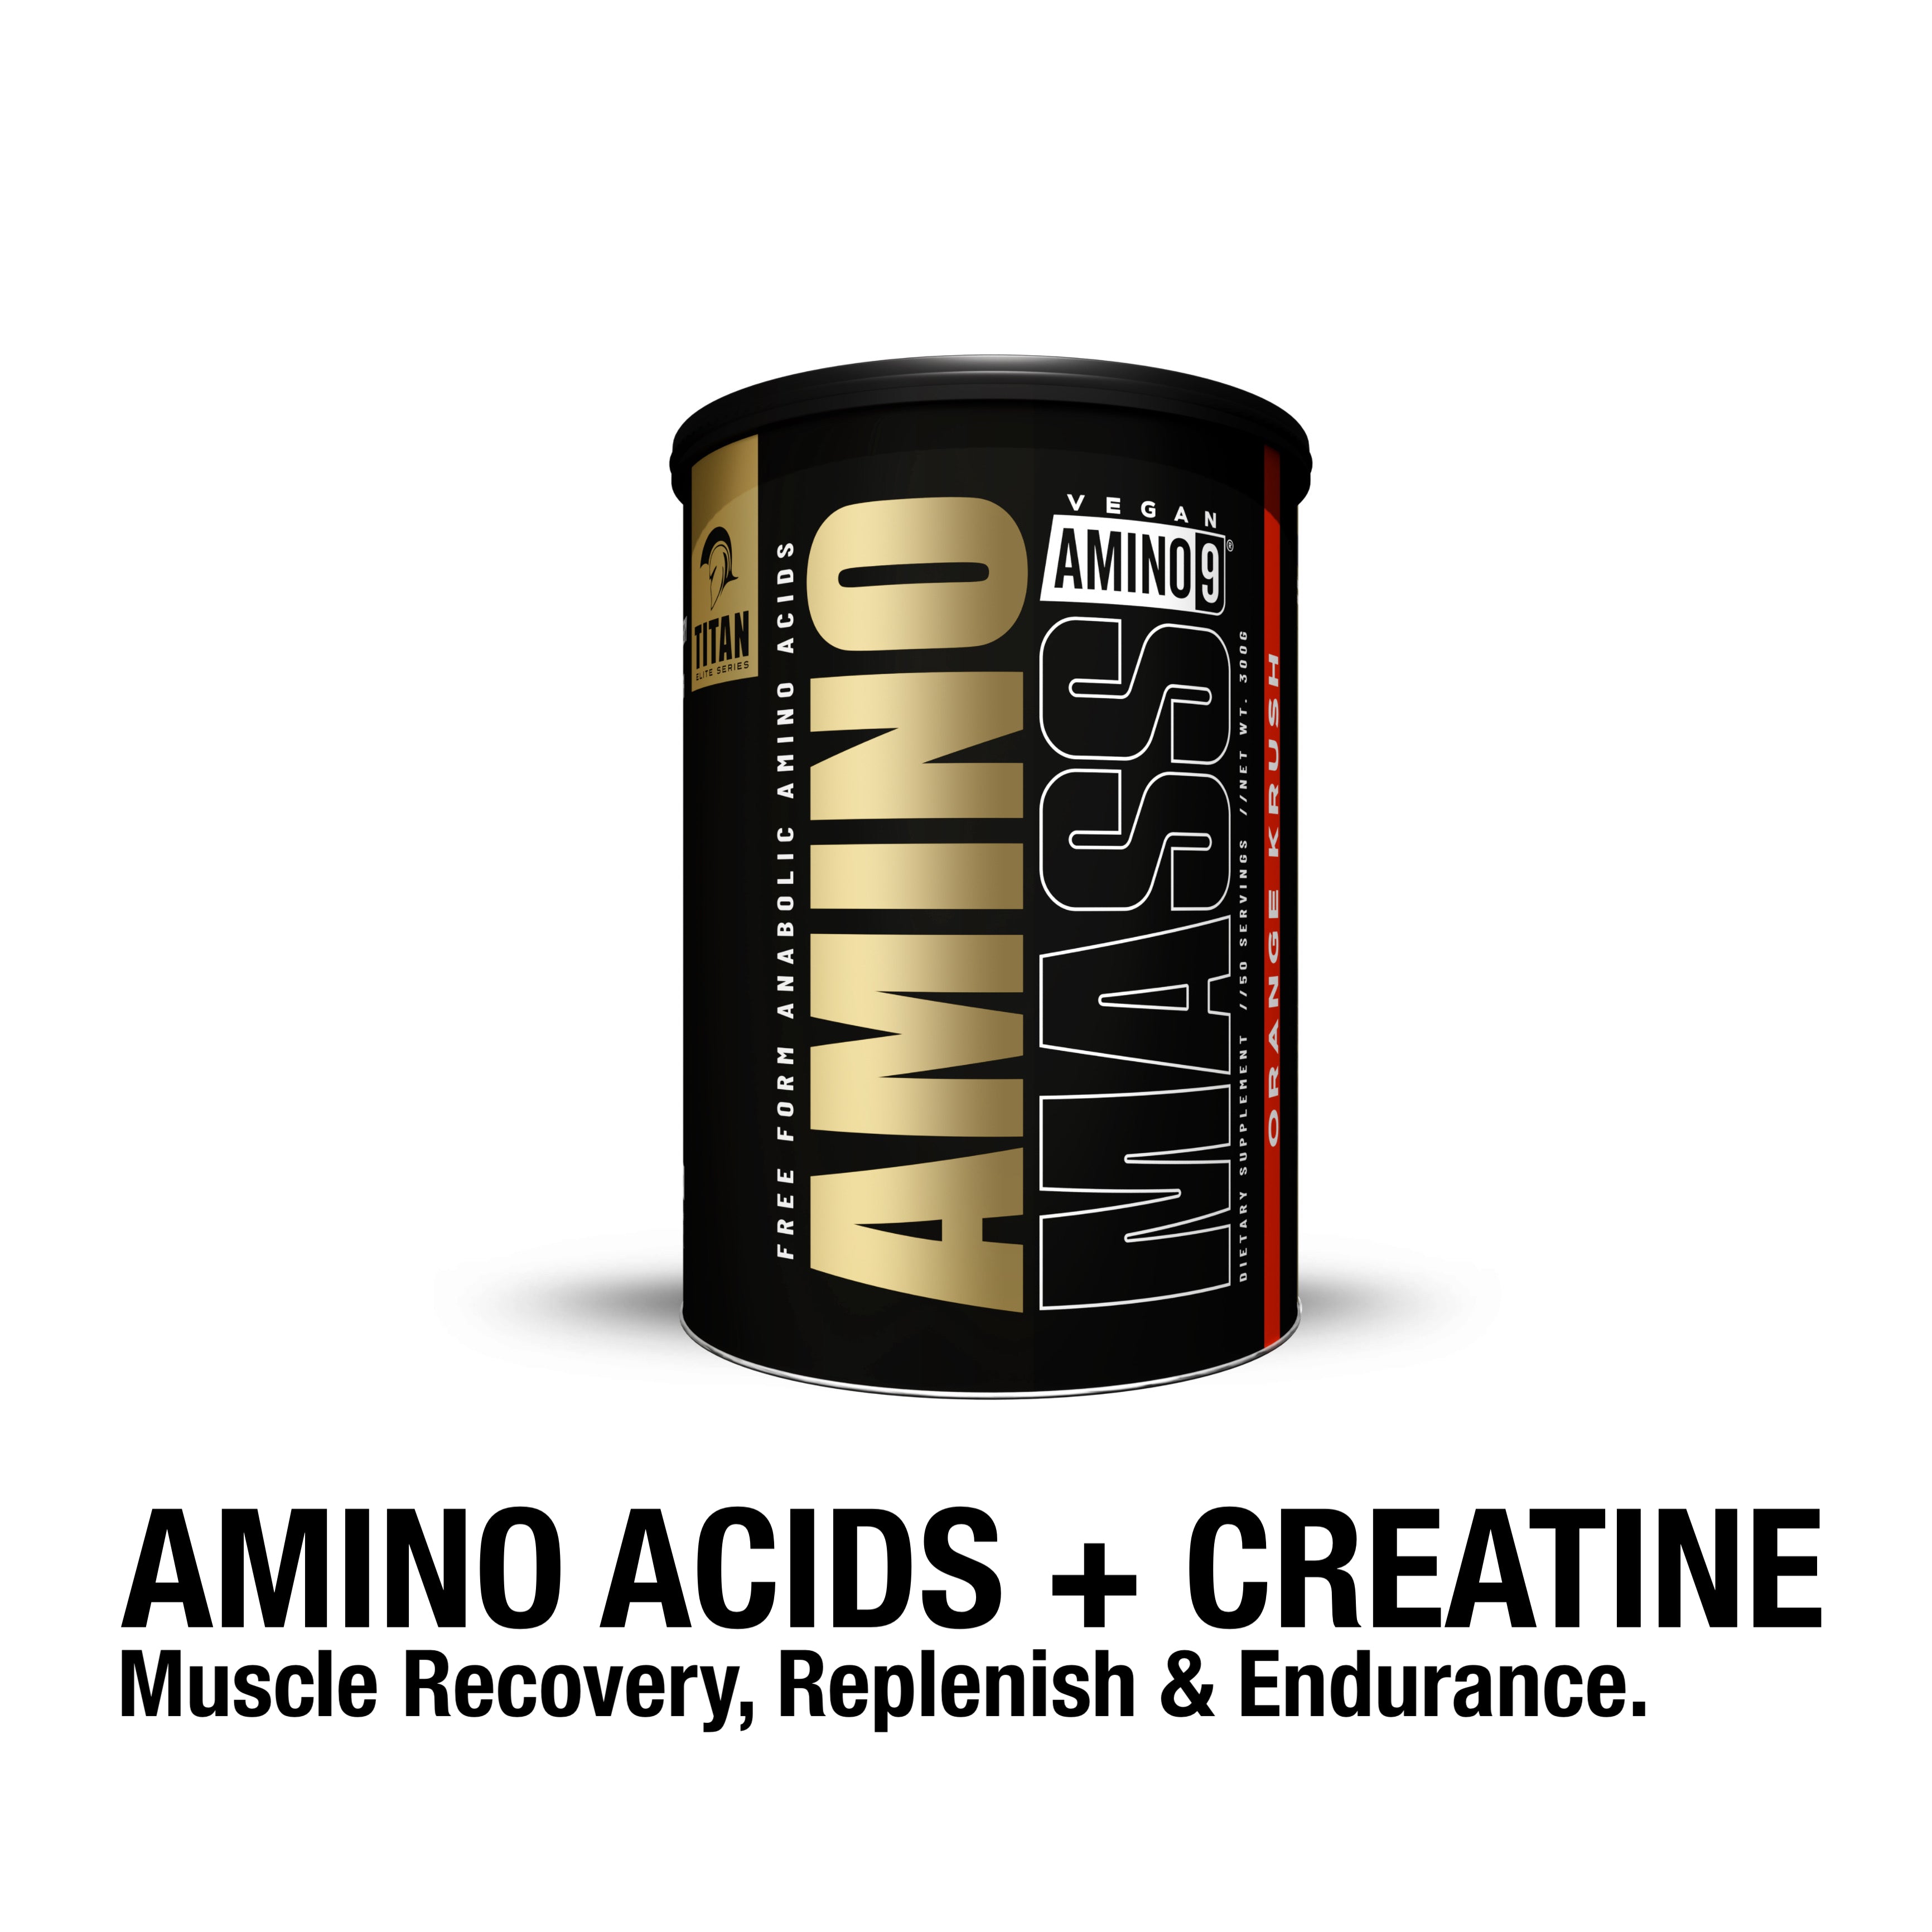 AMINO ACIDS + CREATINE